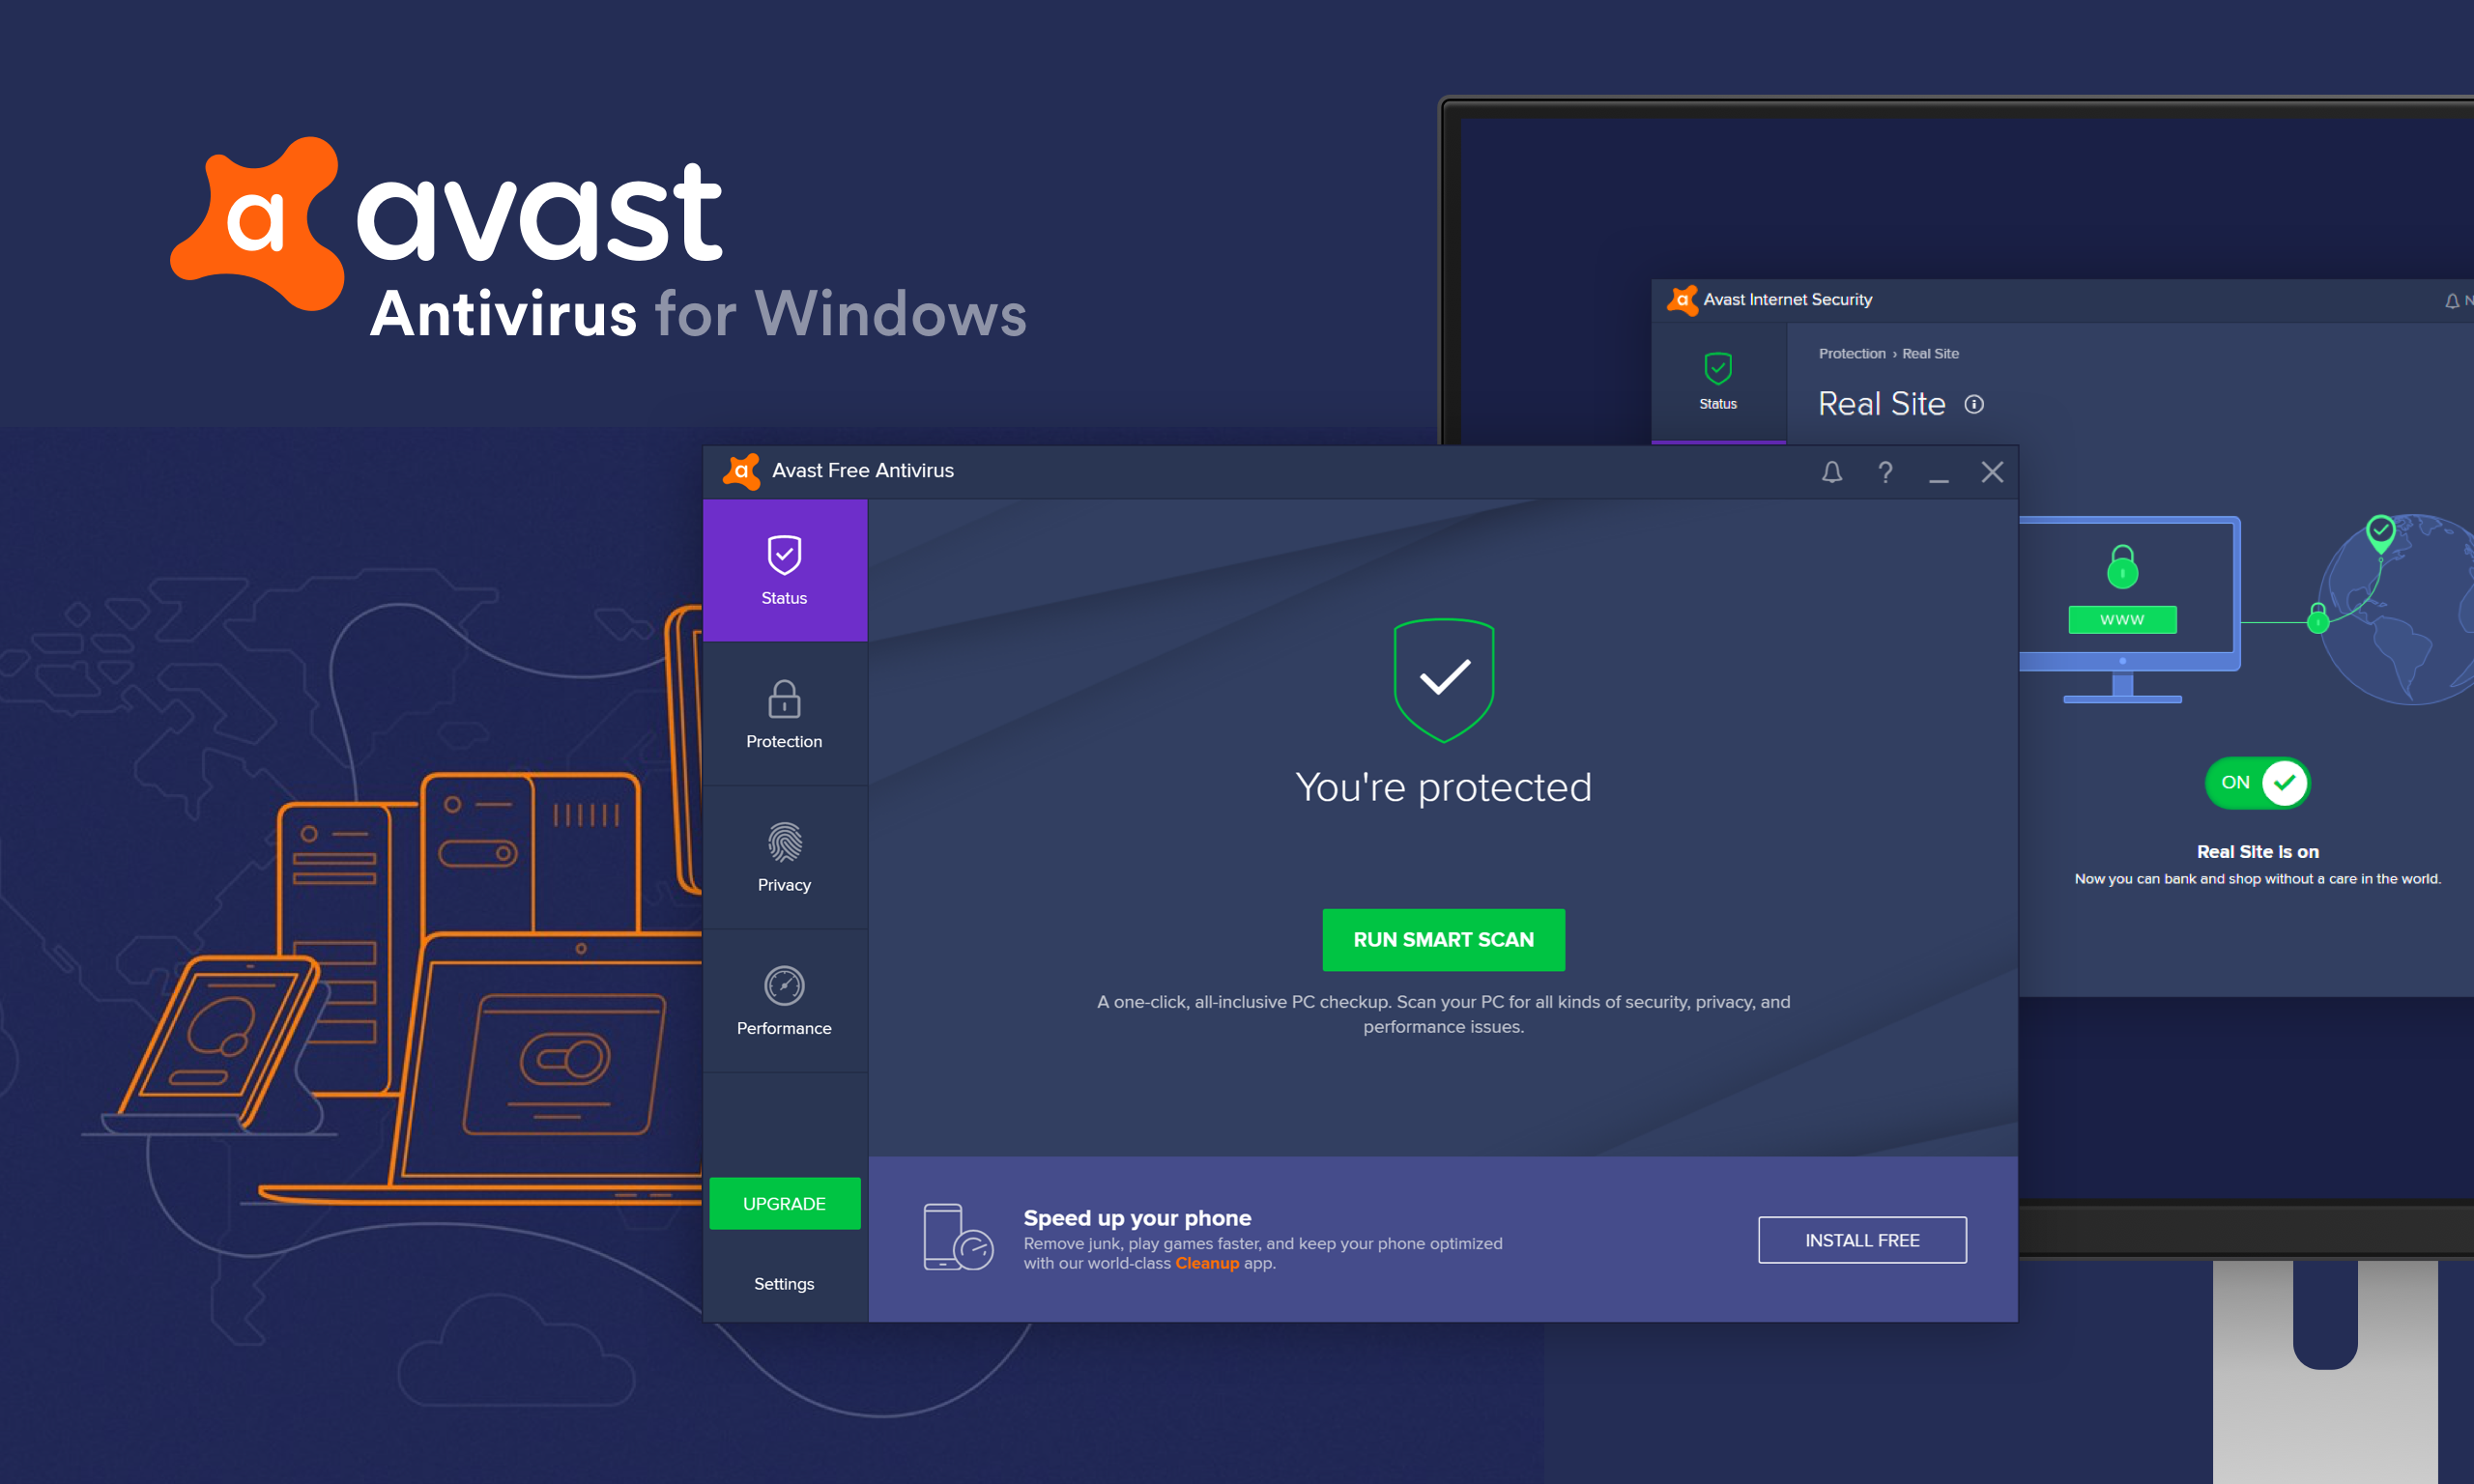 antivirus software for windows vista free download